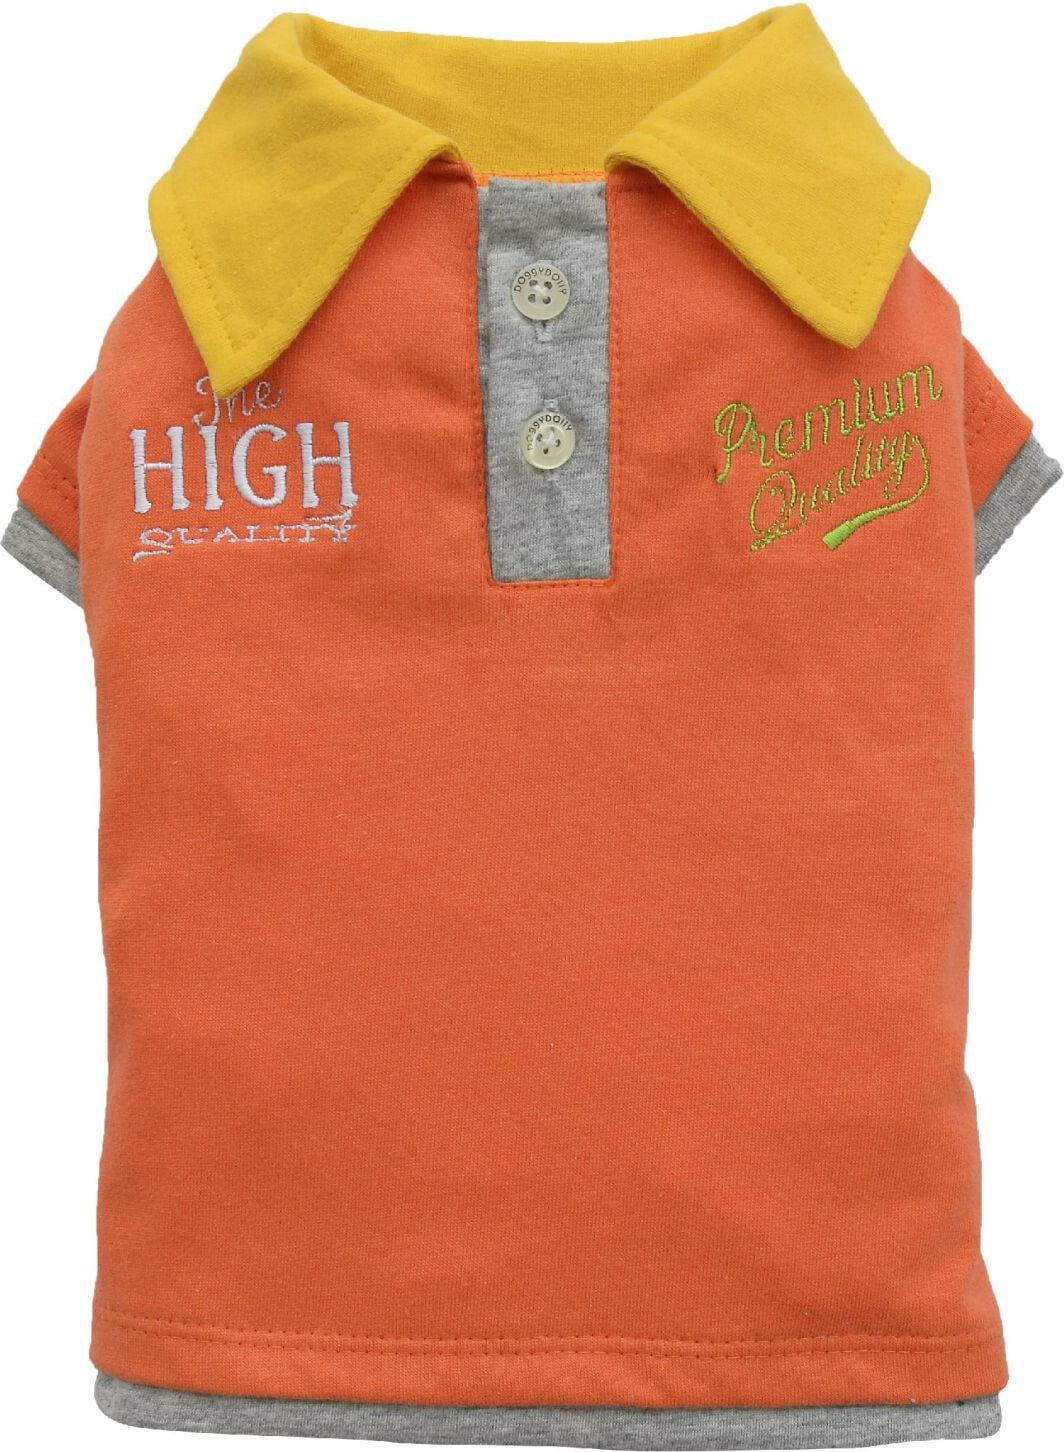 DoggyDolly Polo shirt, orange, XXS 13-15cm / 26-28cm